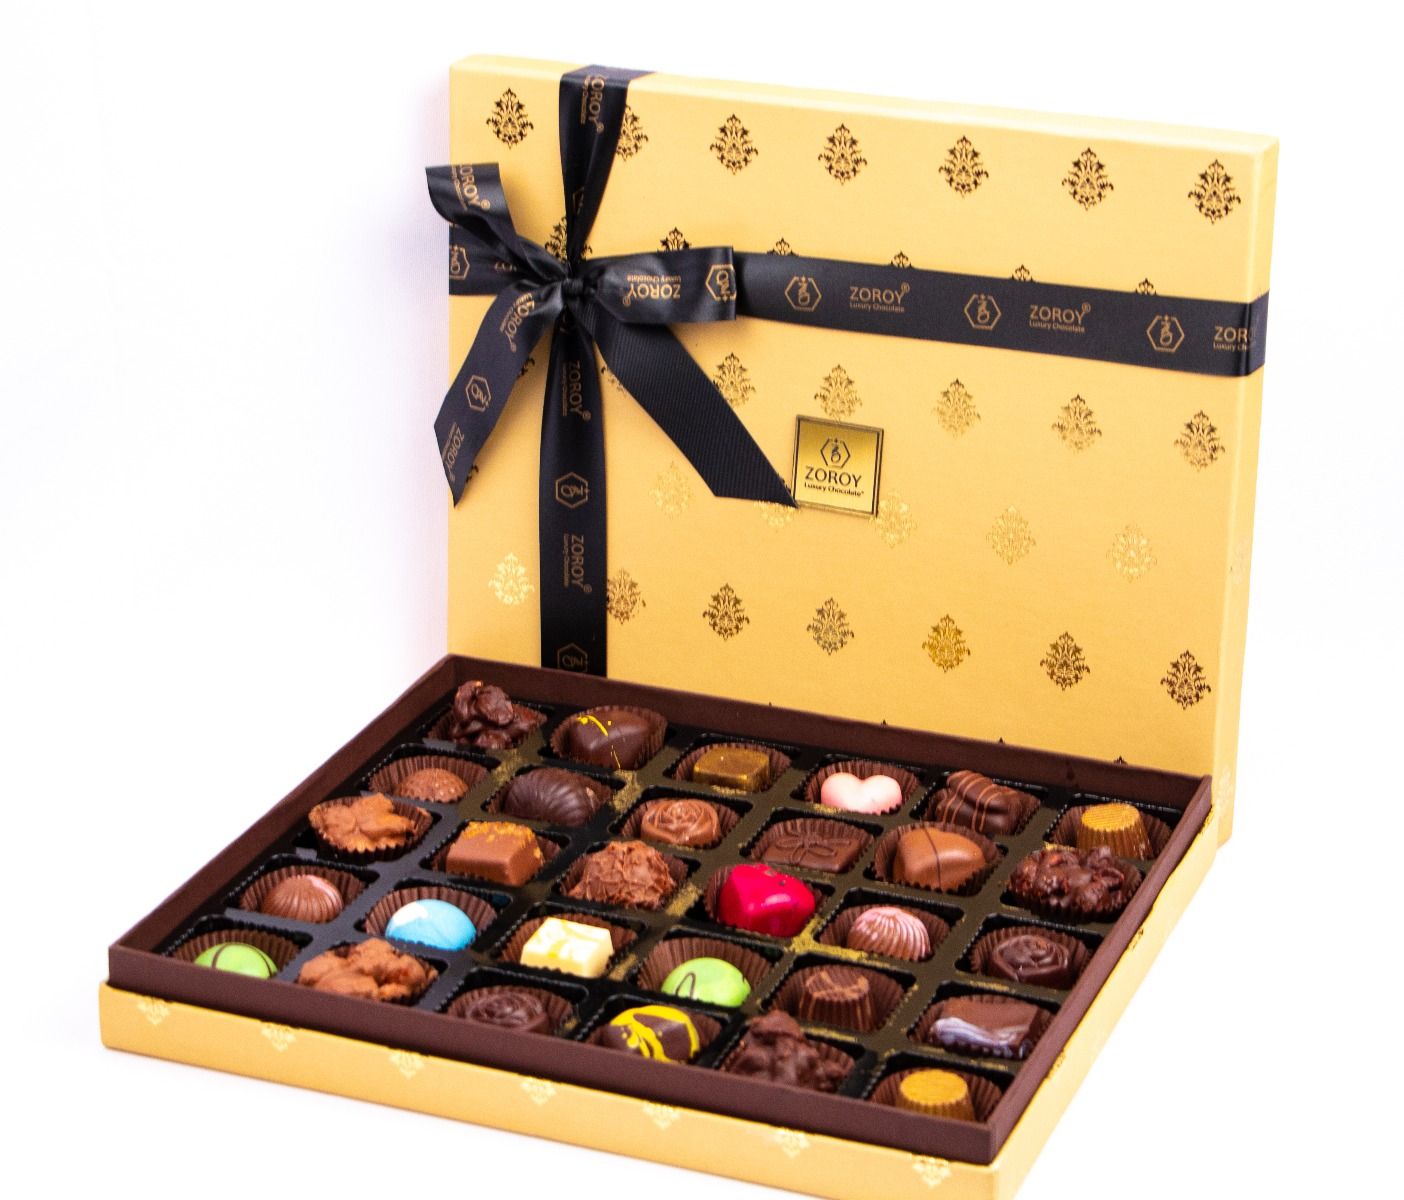 ZOROY LUXURY CHOCOLATE Box of 30 Pure Couverture Chocolate |Signature